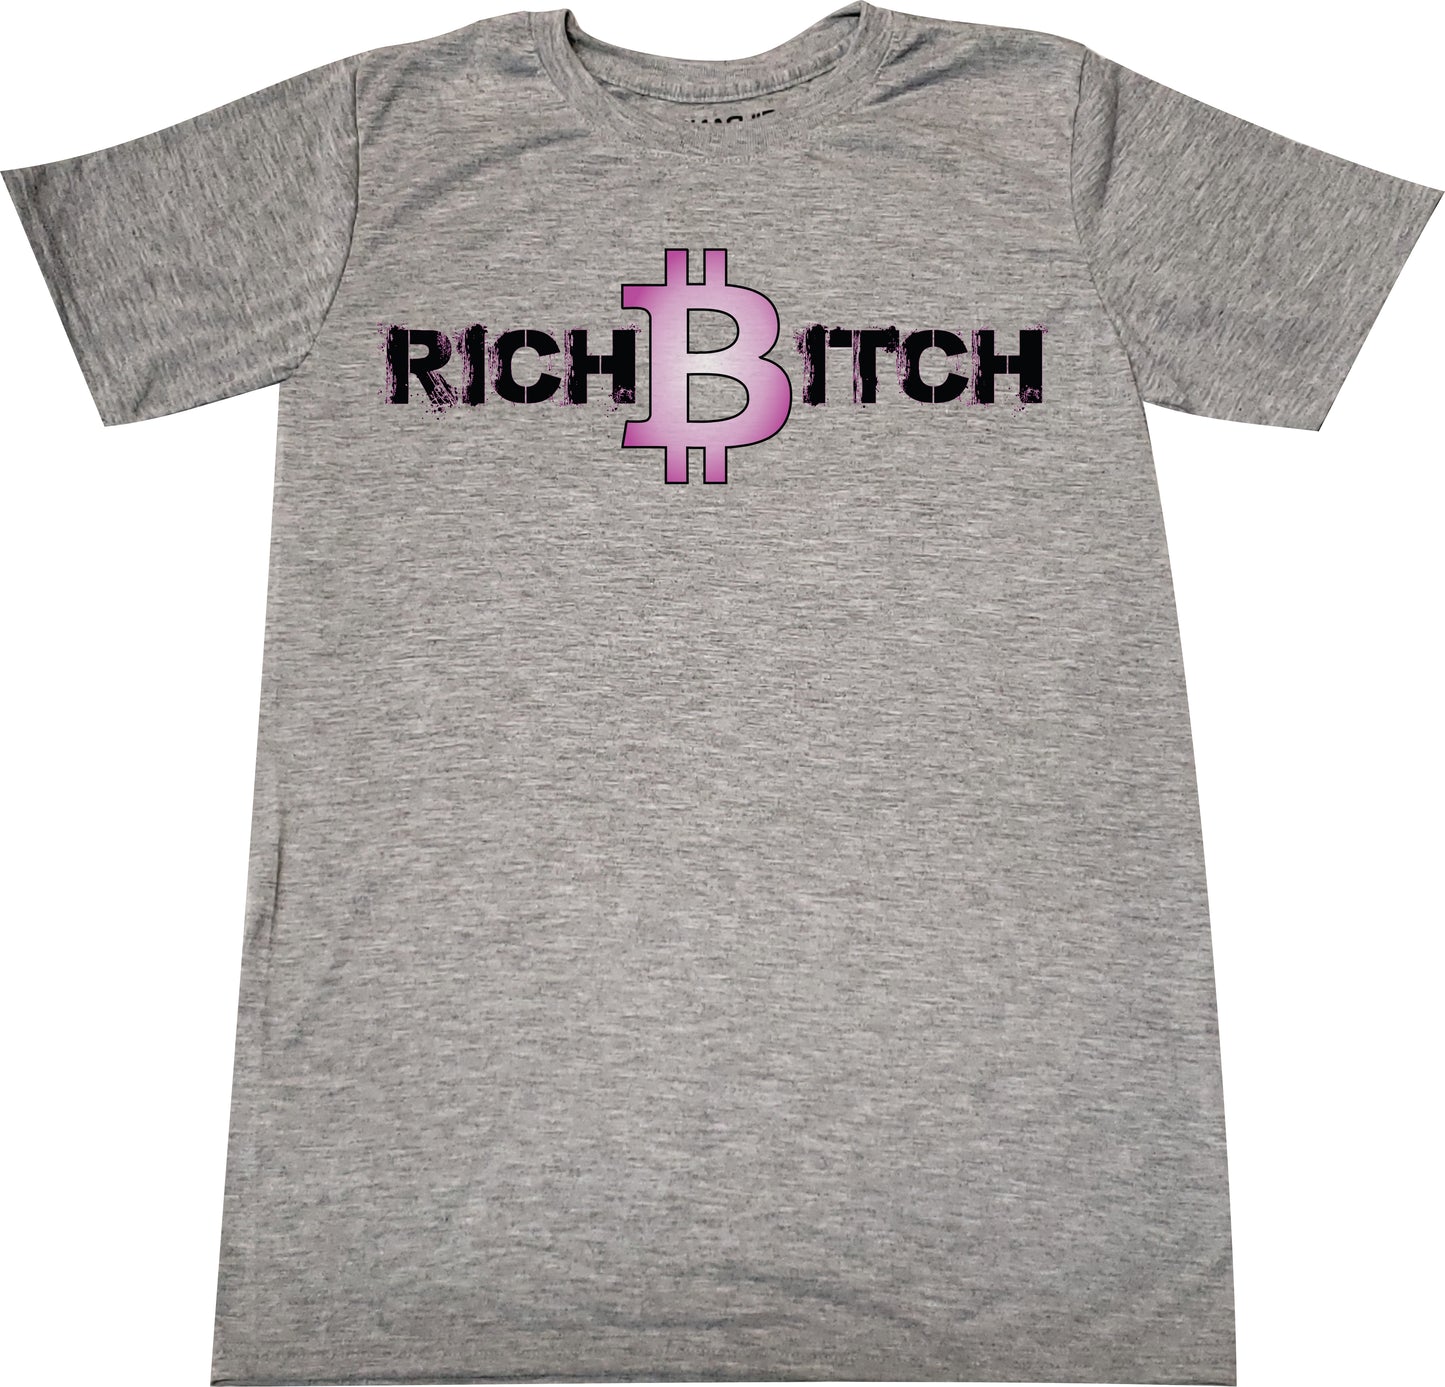 Rich Bitch Bitcoin tshirt